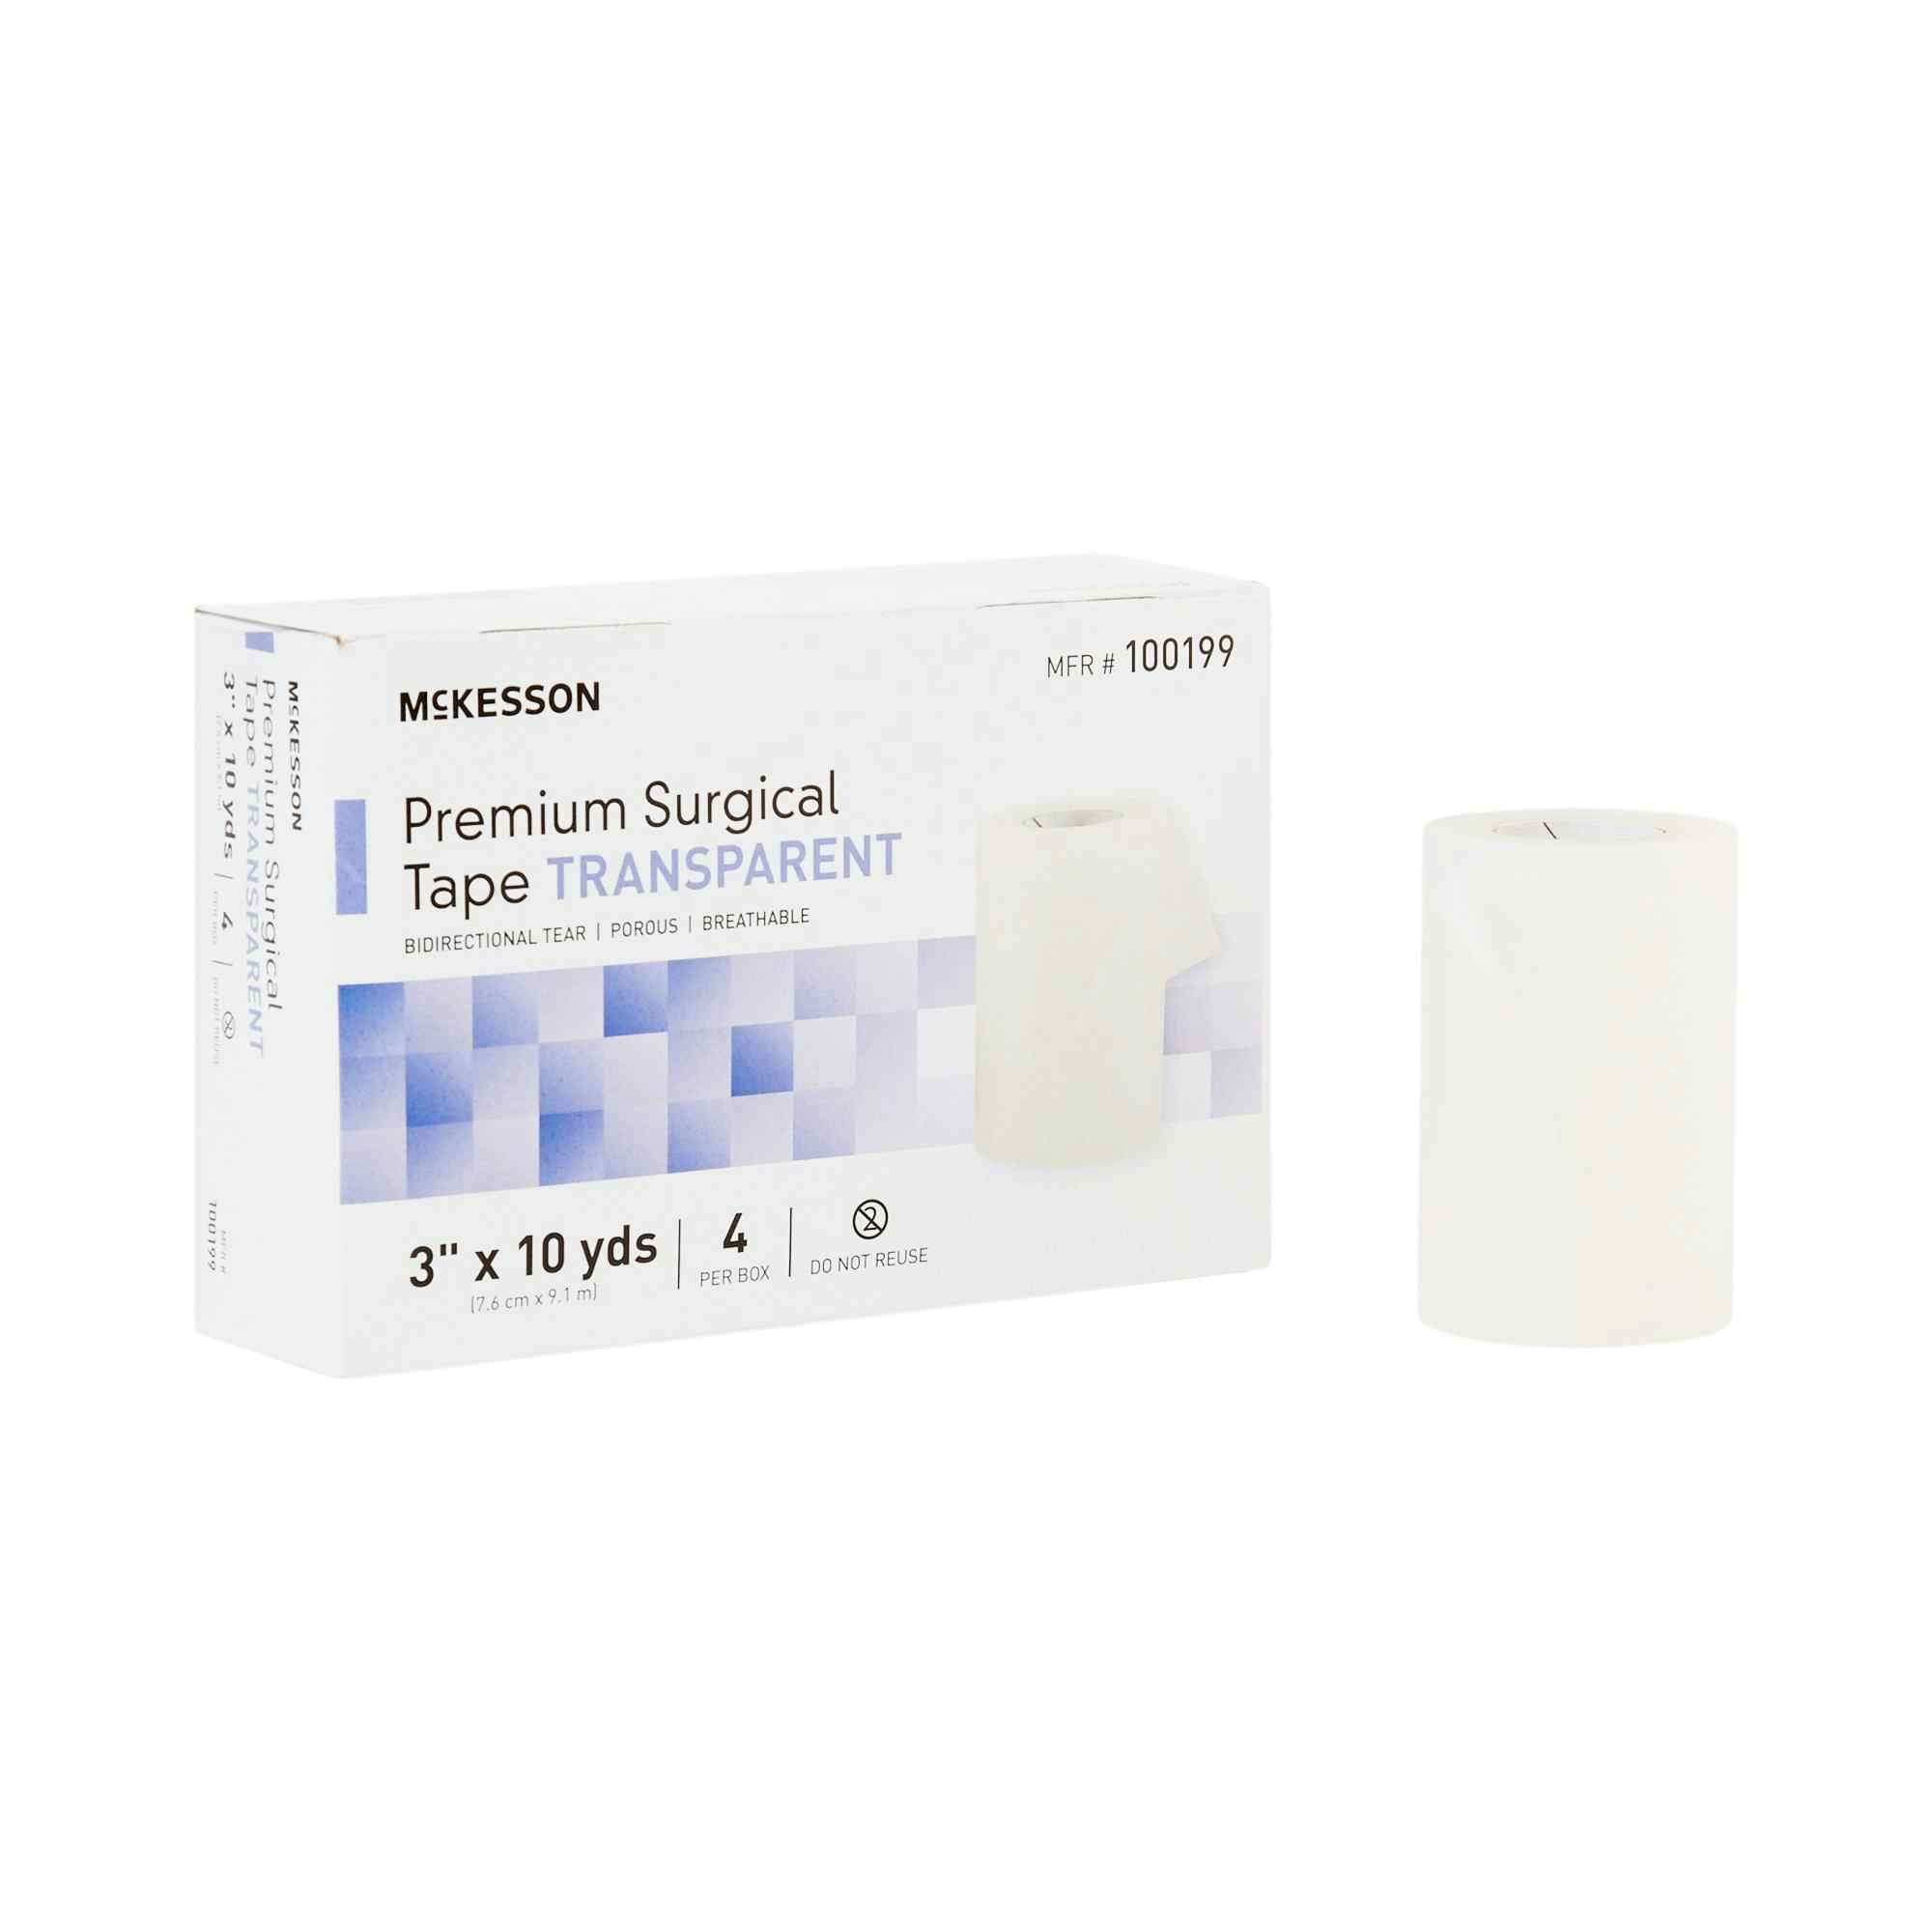 McKesson Plastic Medical Tape, 3 Inch x 10 Yard, Transparent, 100199, Box of 4